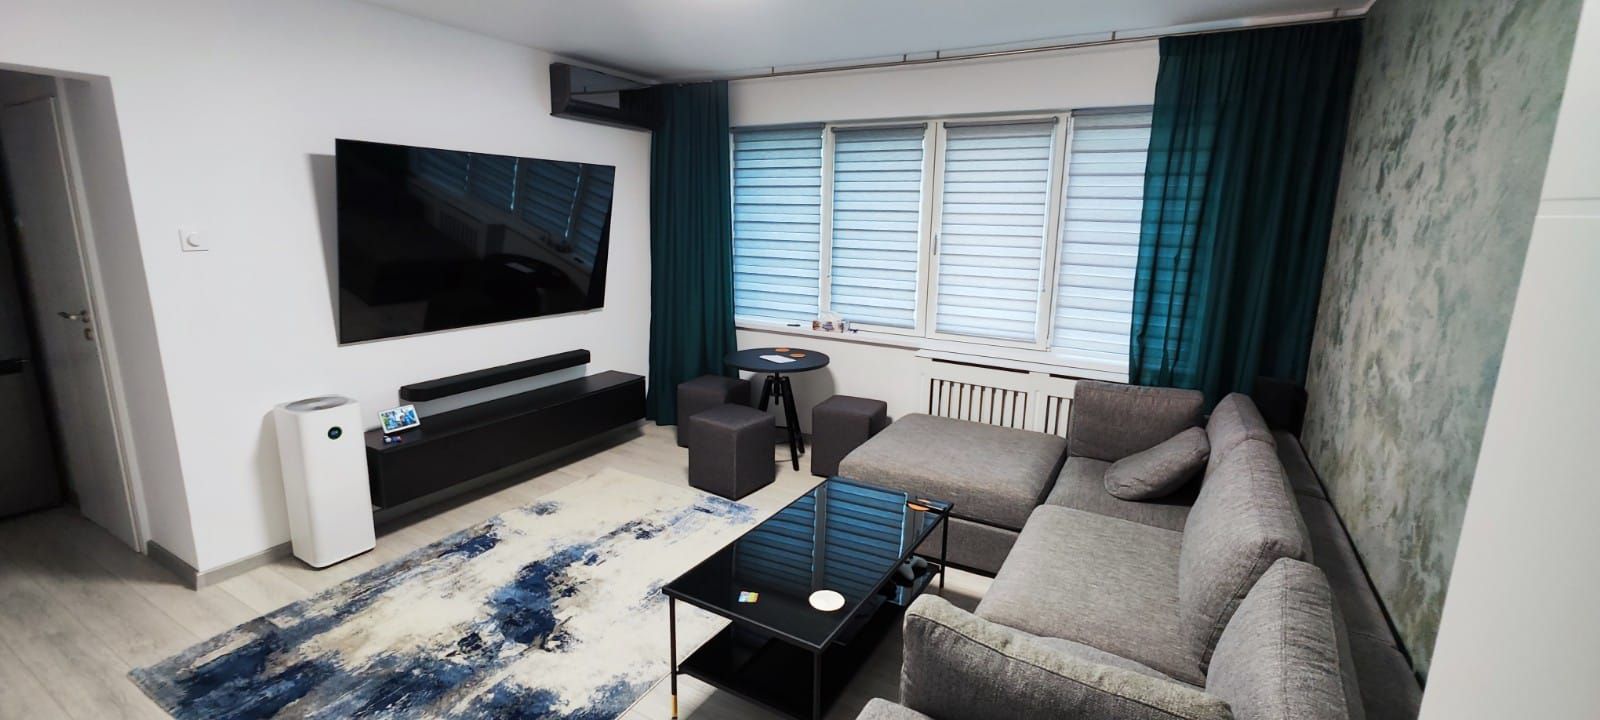 Apartament Smart Home cu 3 camere pe bd. Ion Mihalache